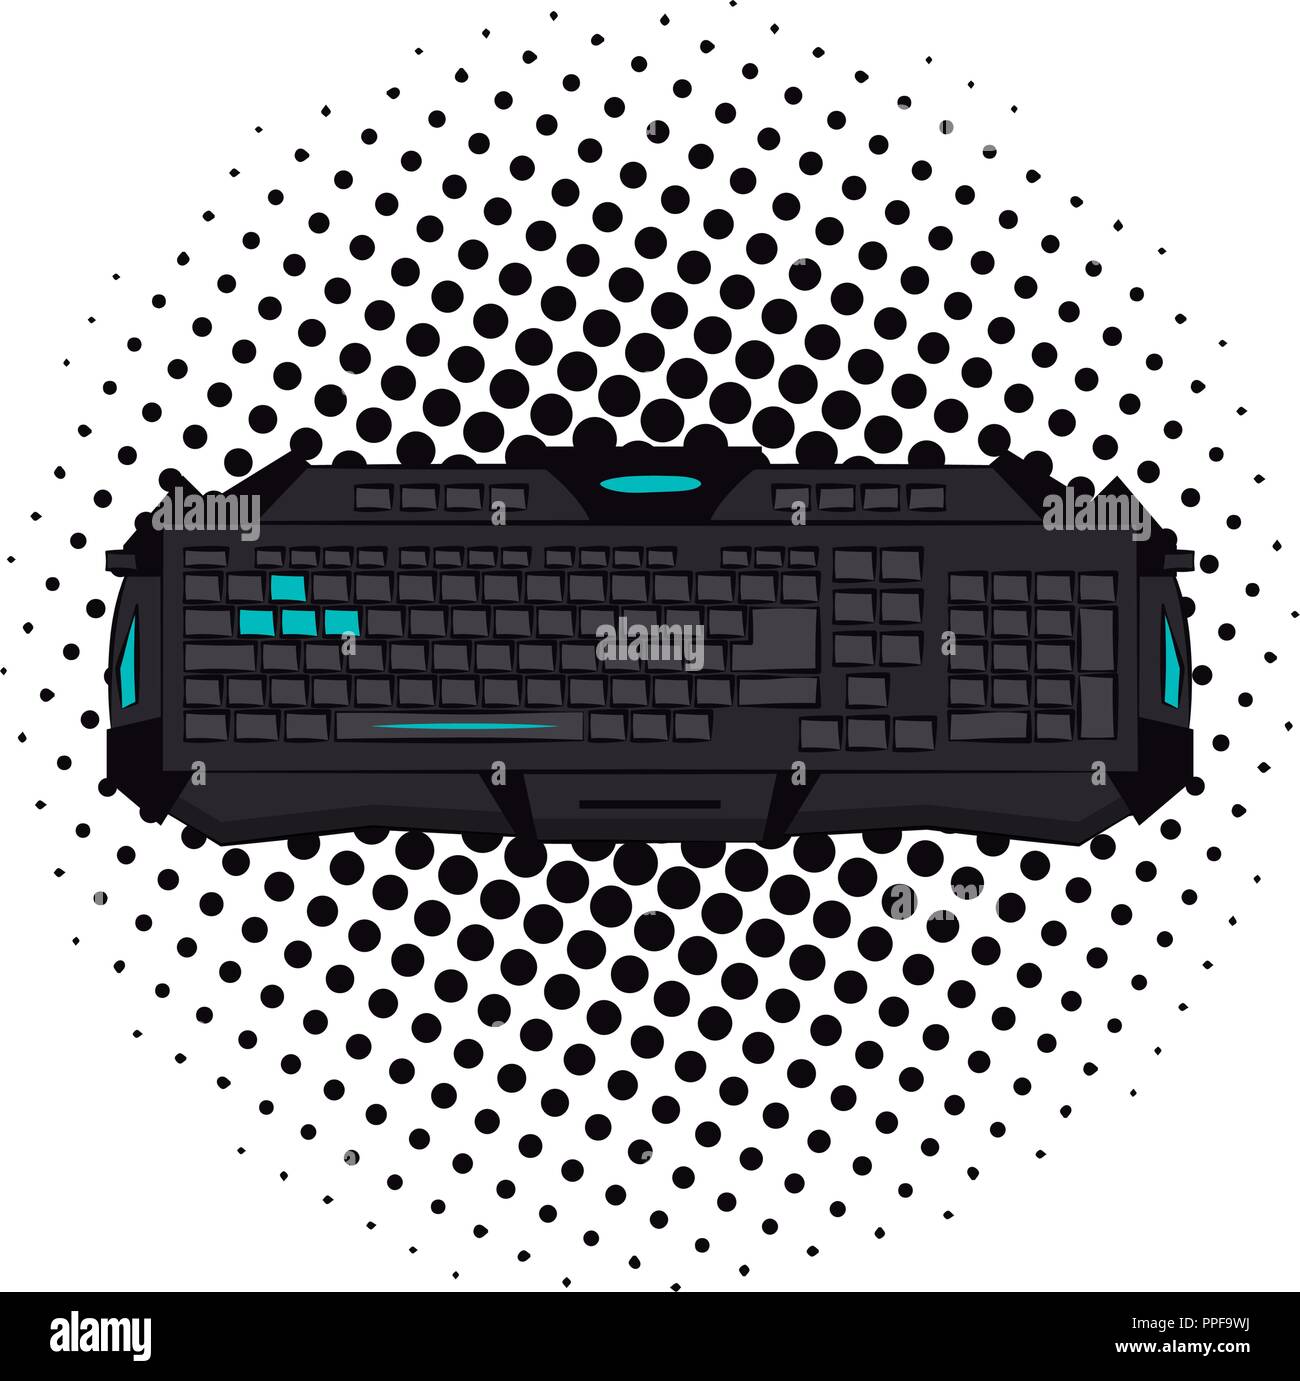 Dispositivo de teclado Gamer pop art Imagen Vector de stock - Alamy